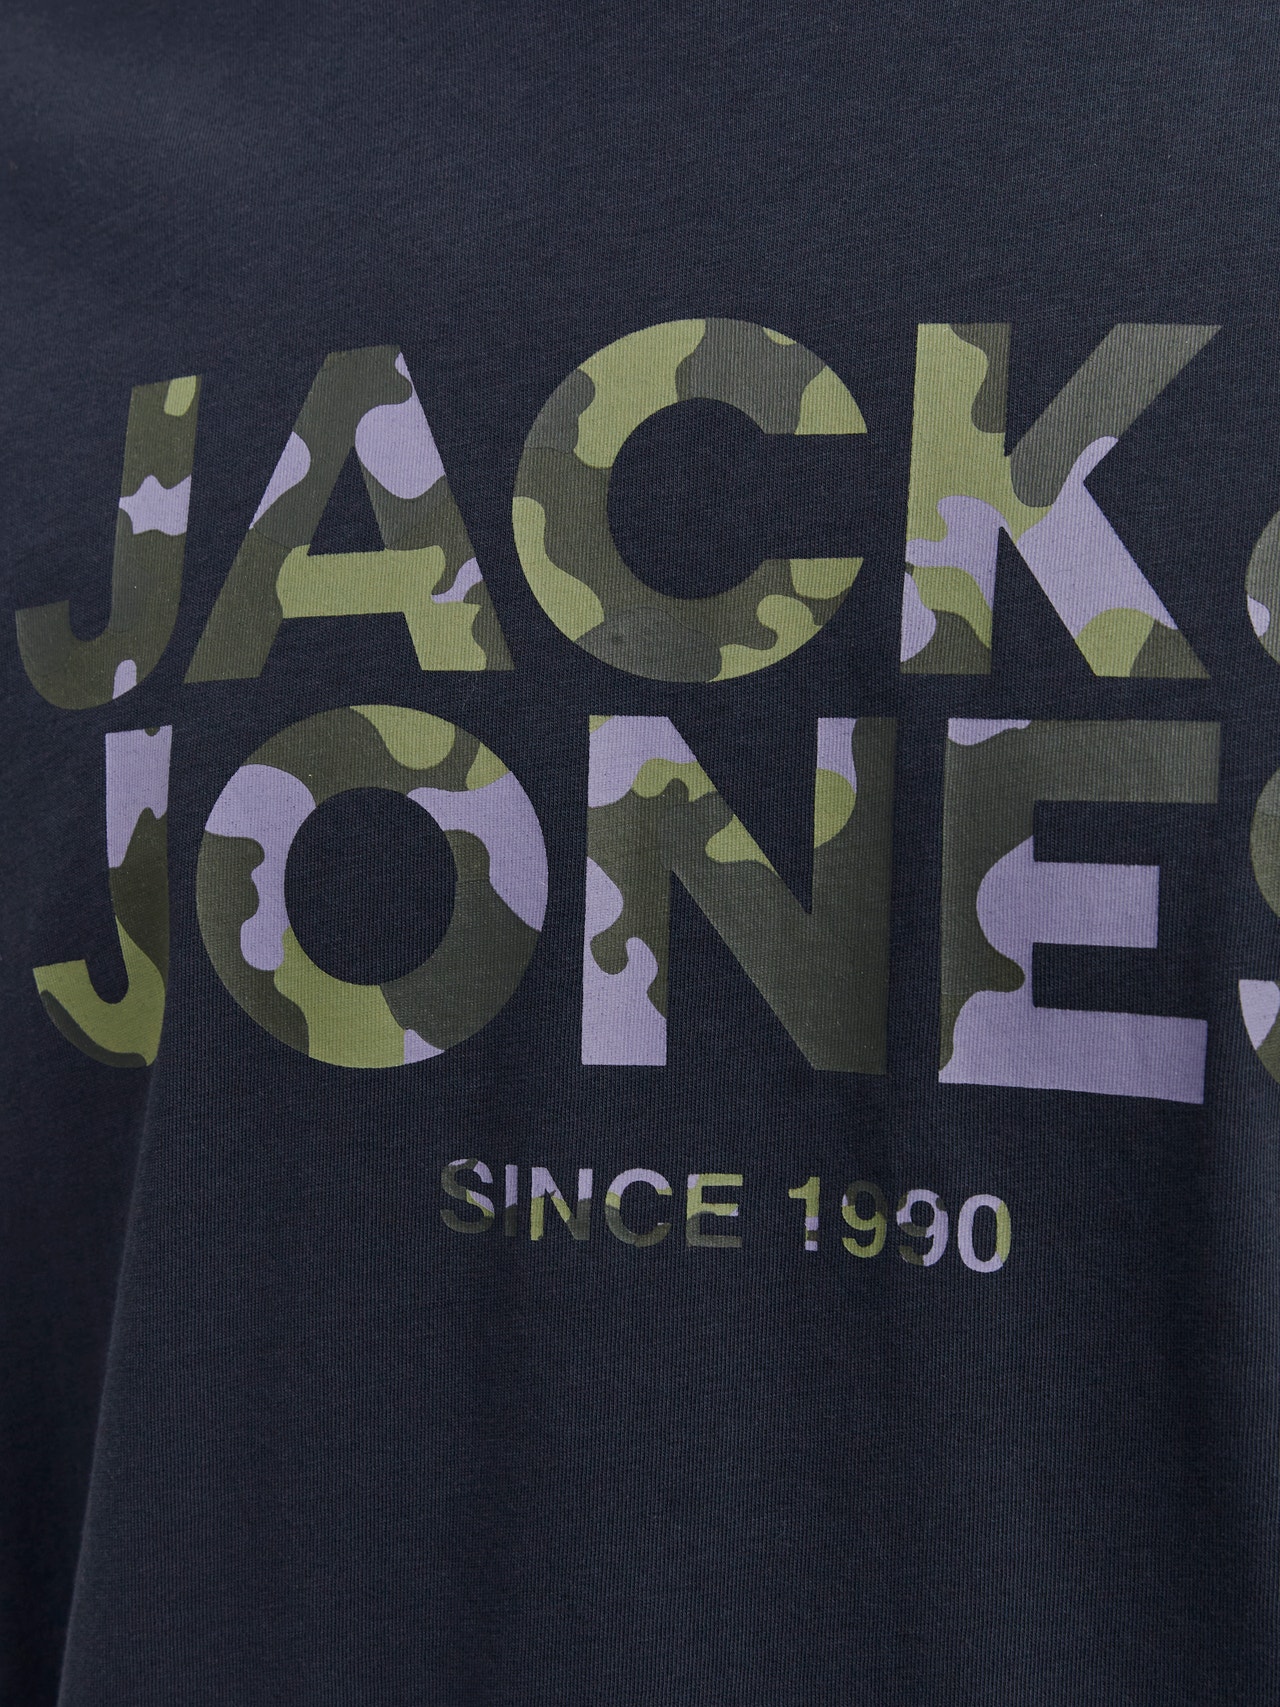 Jack & Jones Logo Ronde hals T-shirt -Navy Blazer - 12266155